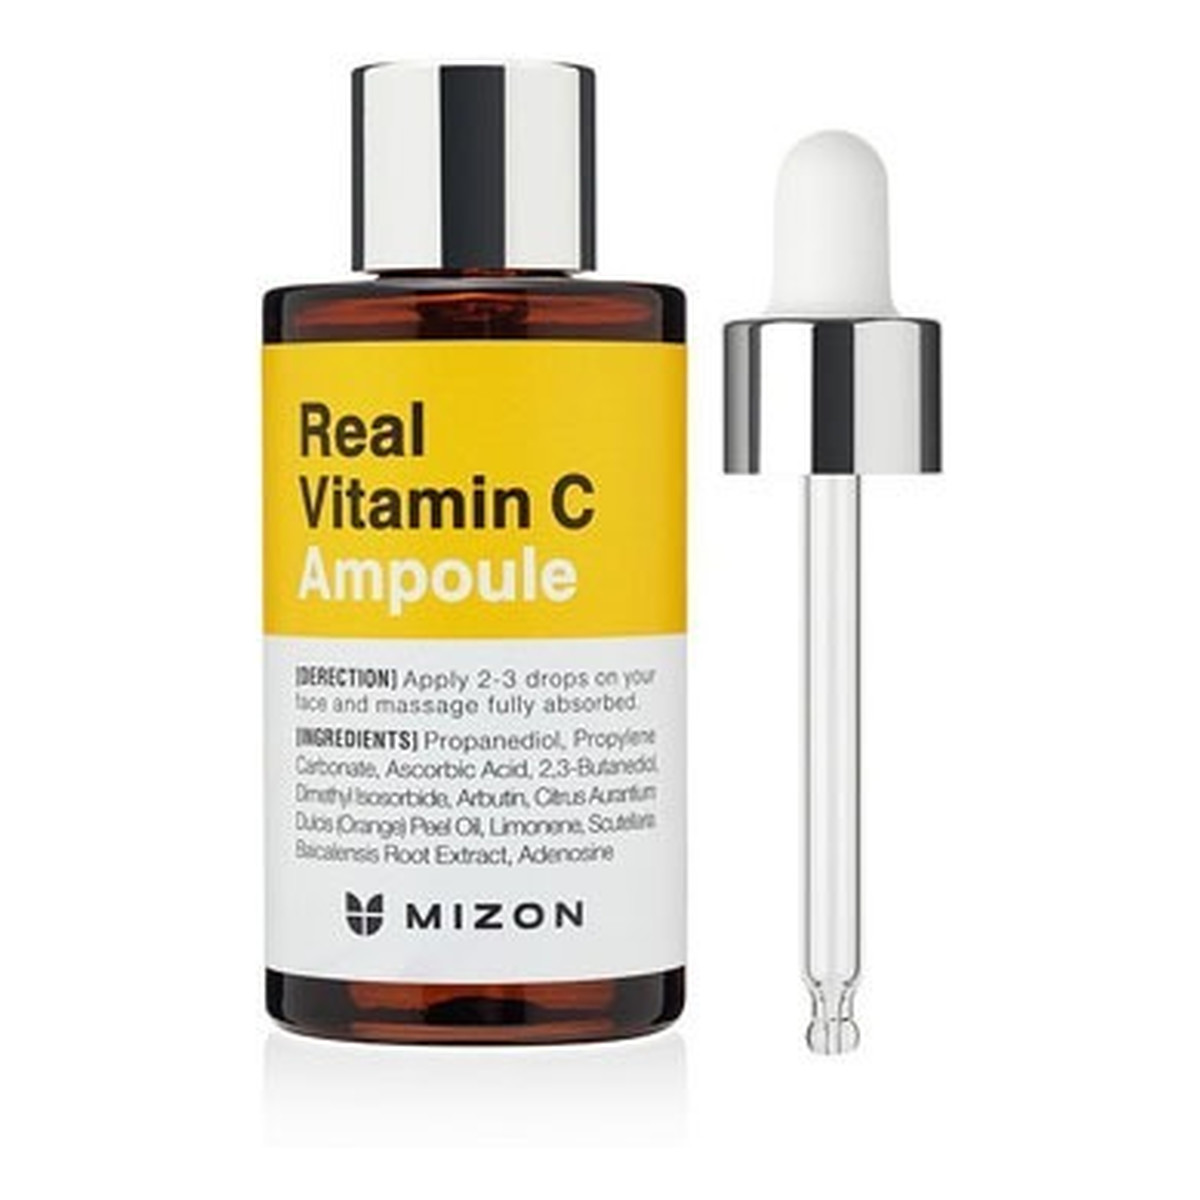 Mizon Real Vitamin C Ampoule 30ml